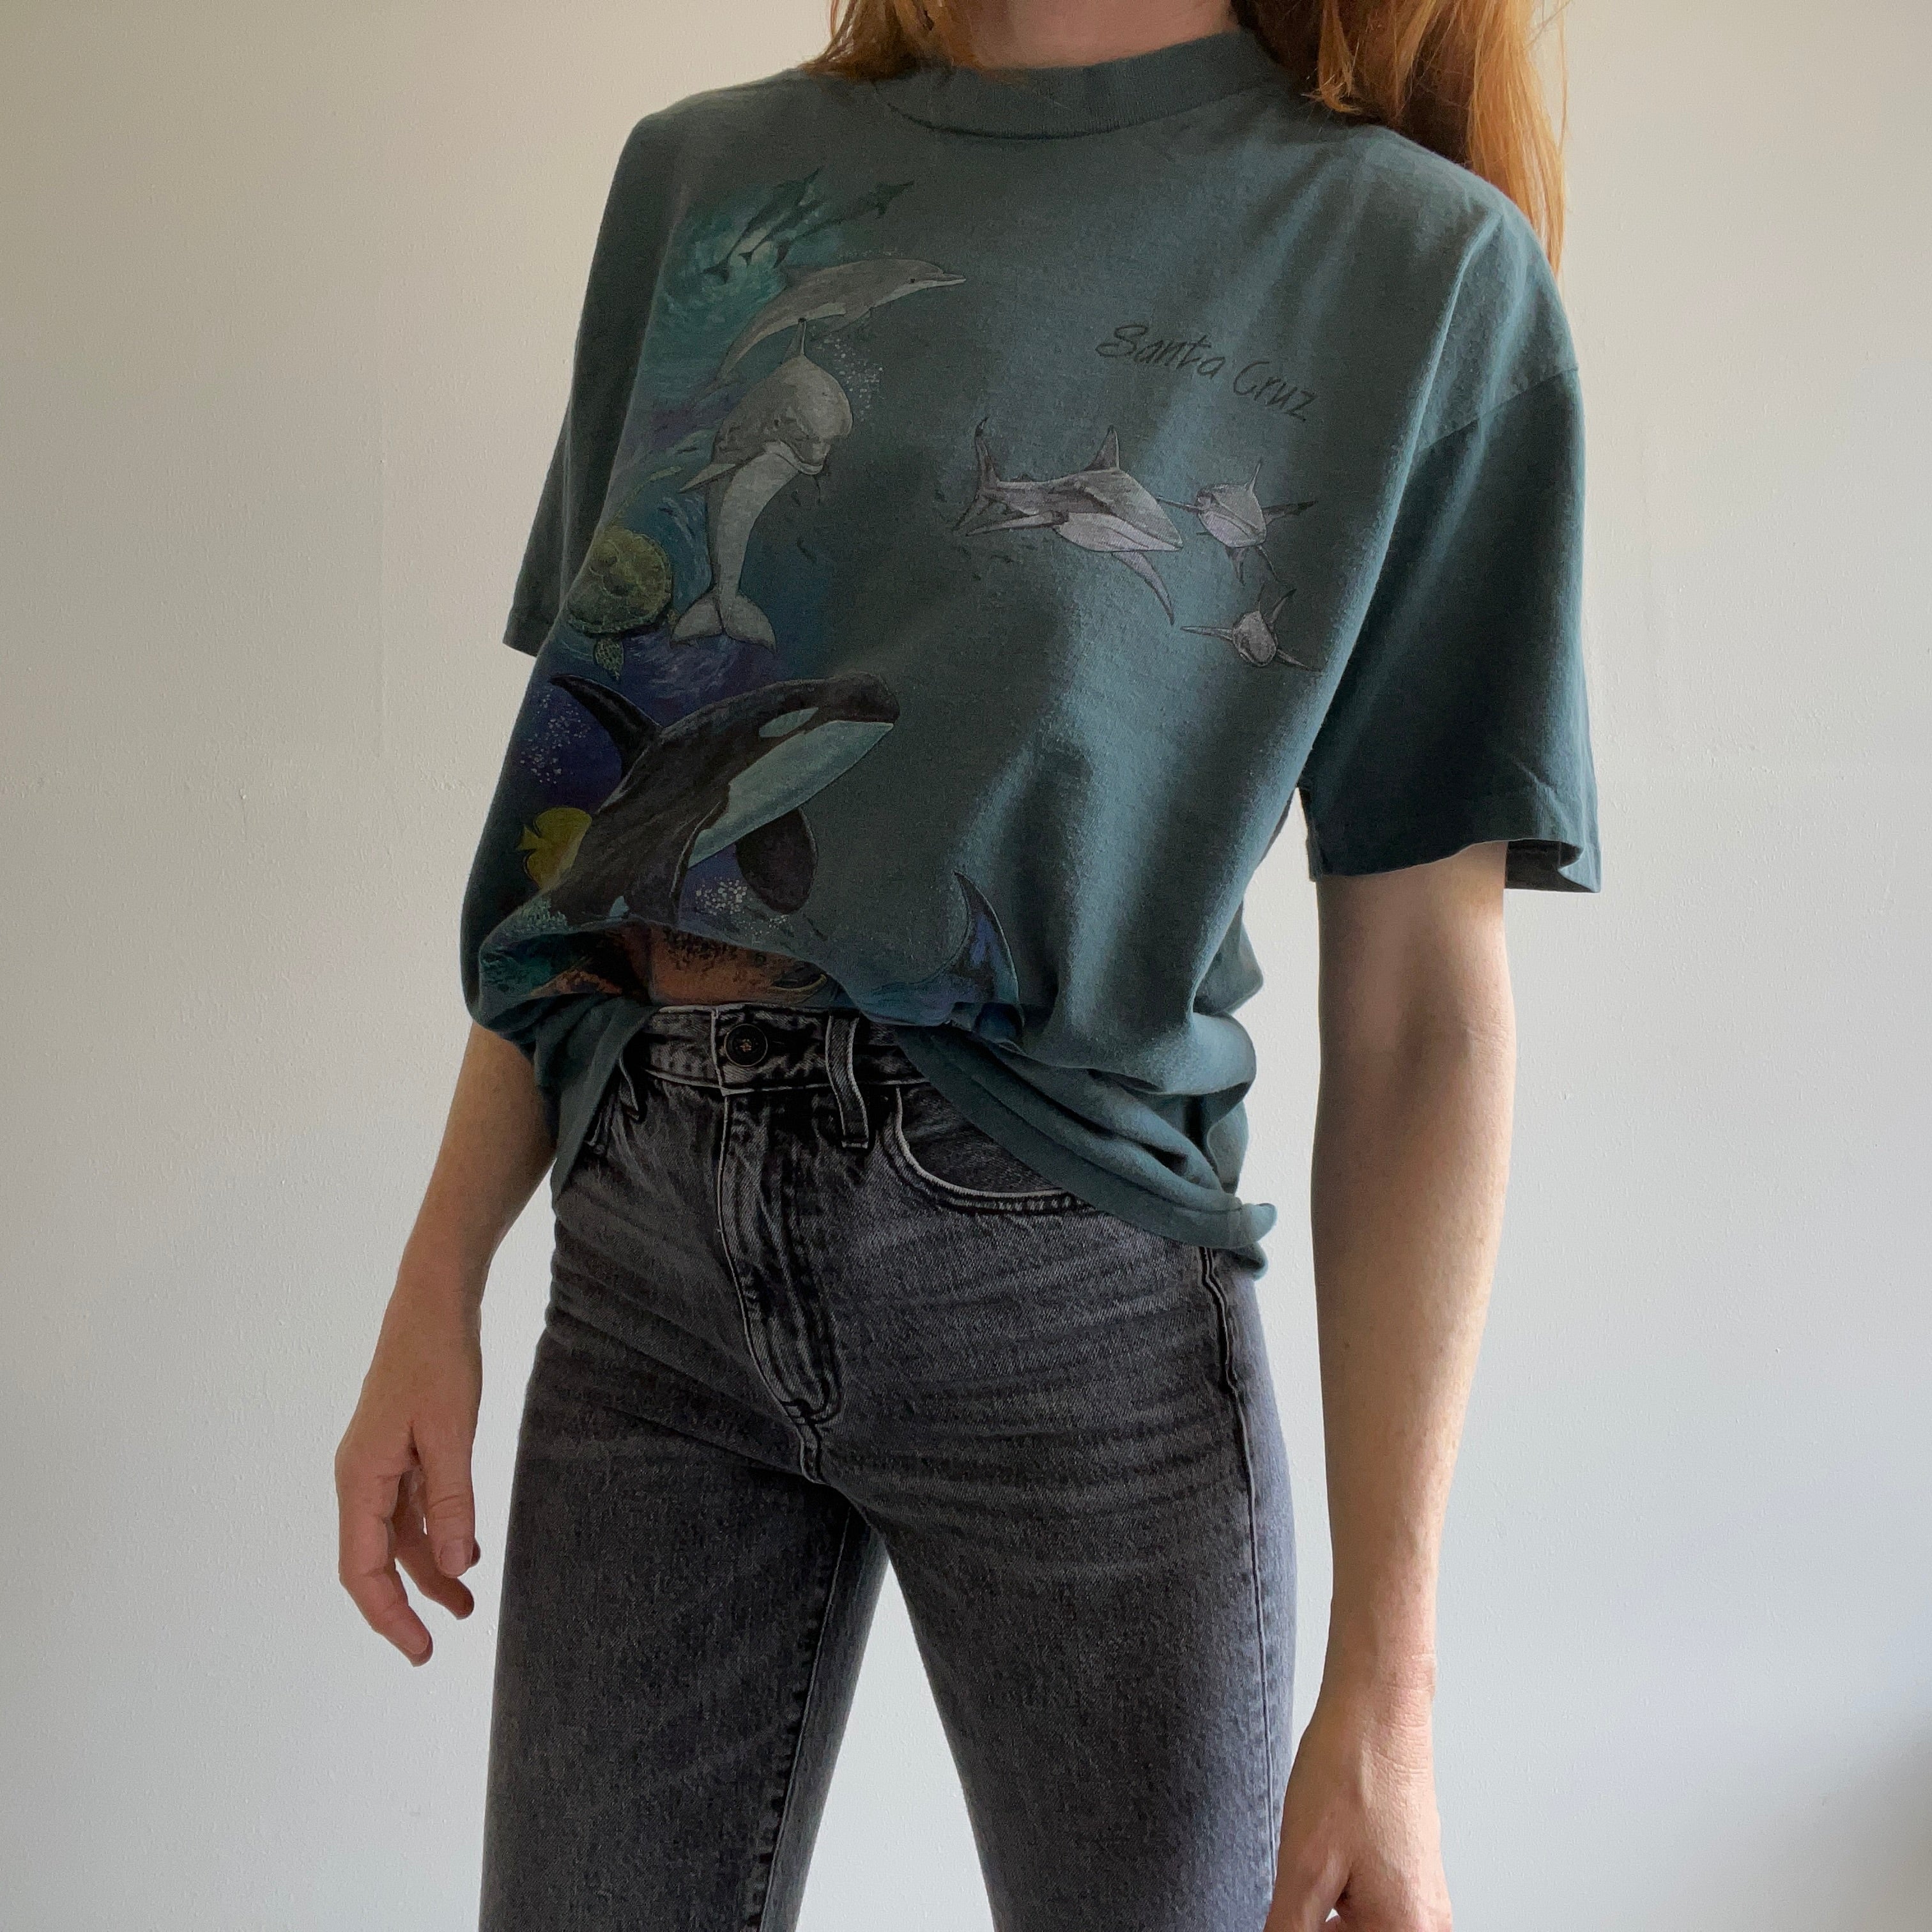 1990s Santa Cruz Dolphin and Whale Cotton Tourist T-Shirt